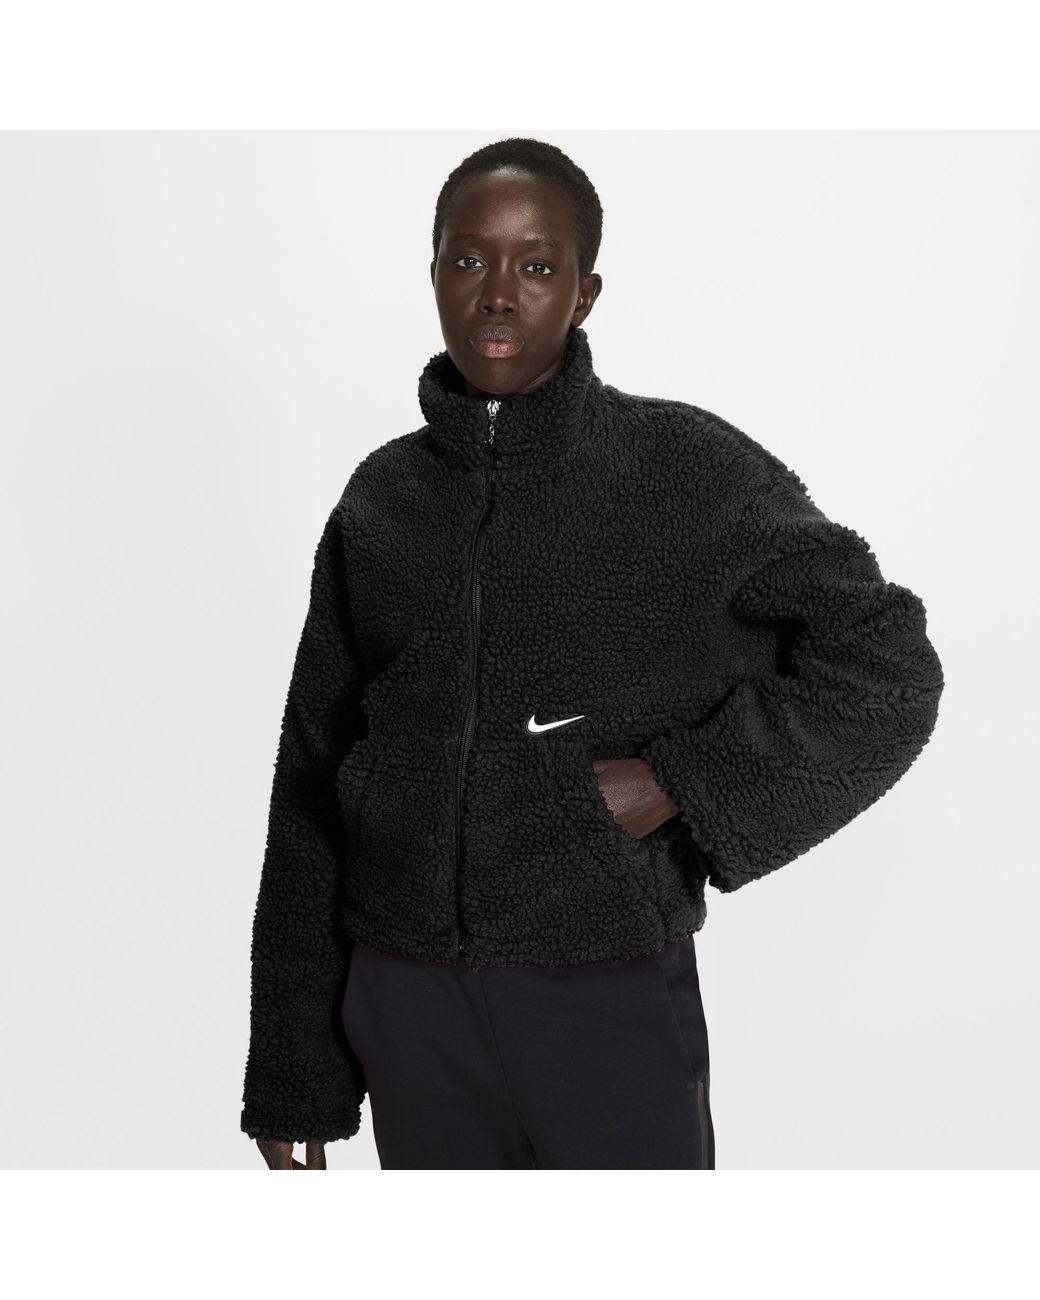 Nike Synthetic Nsw Swoosh Jacket Sherpa in Black/White (Black) - Save ...